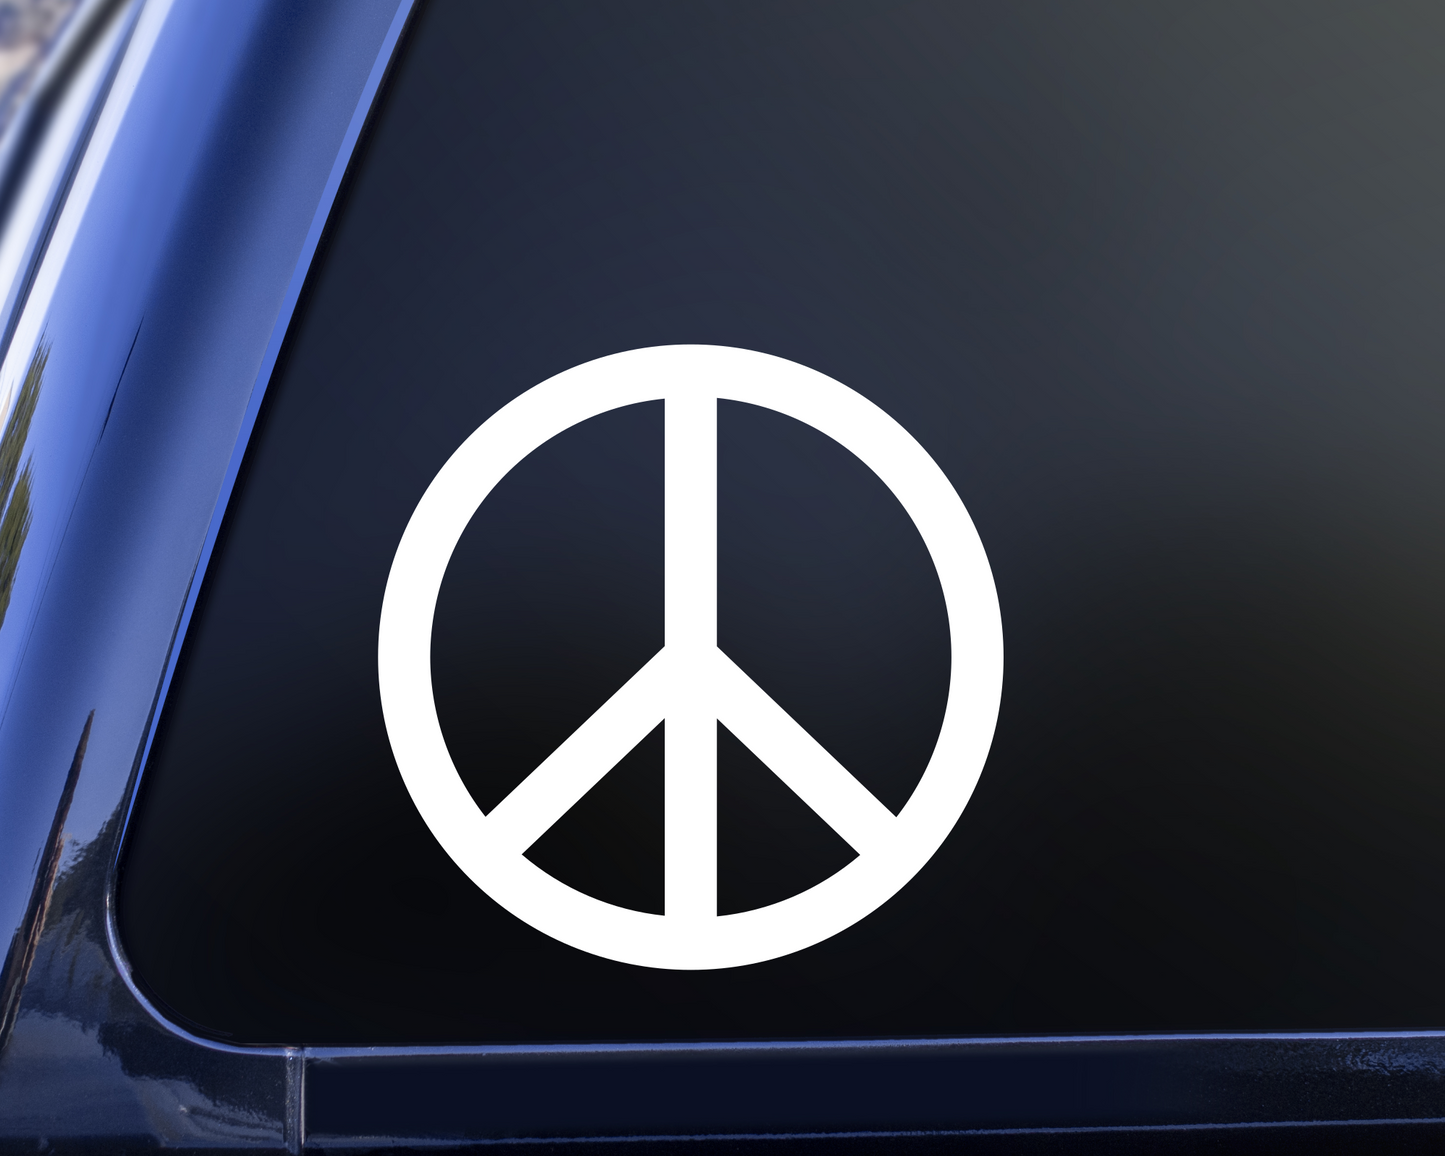 Peace Symbol Decal